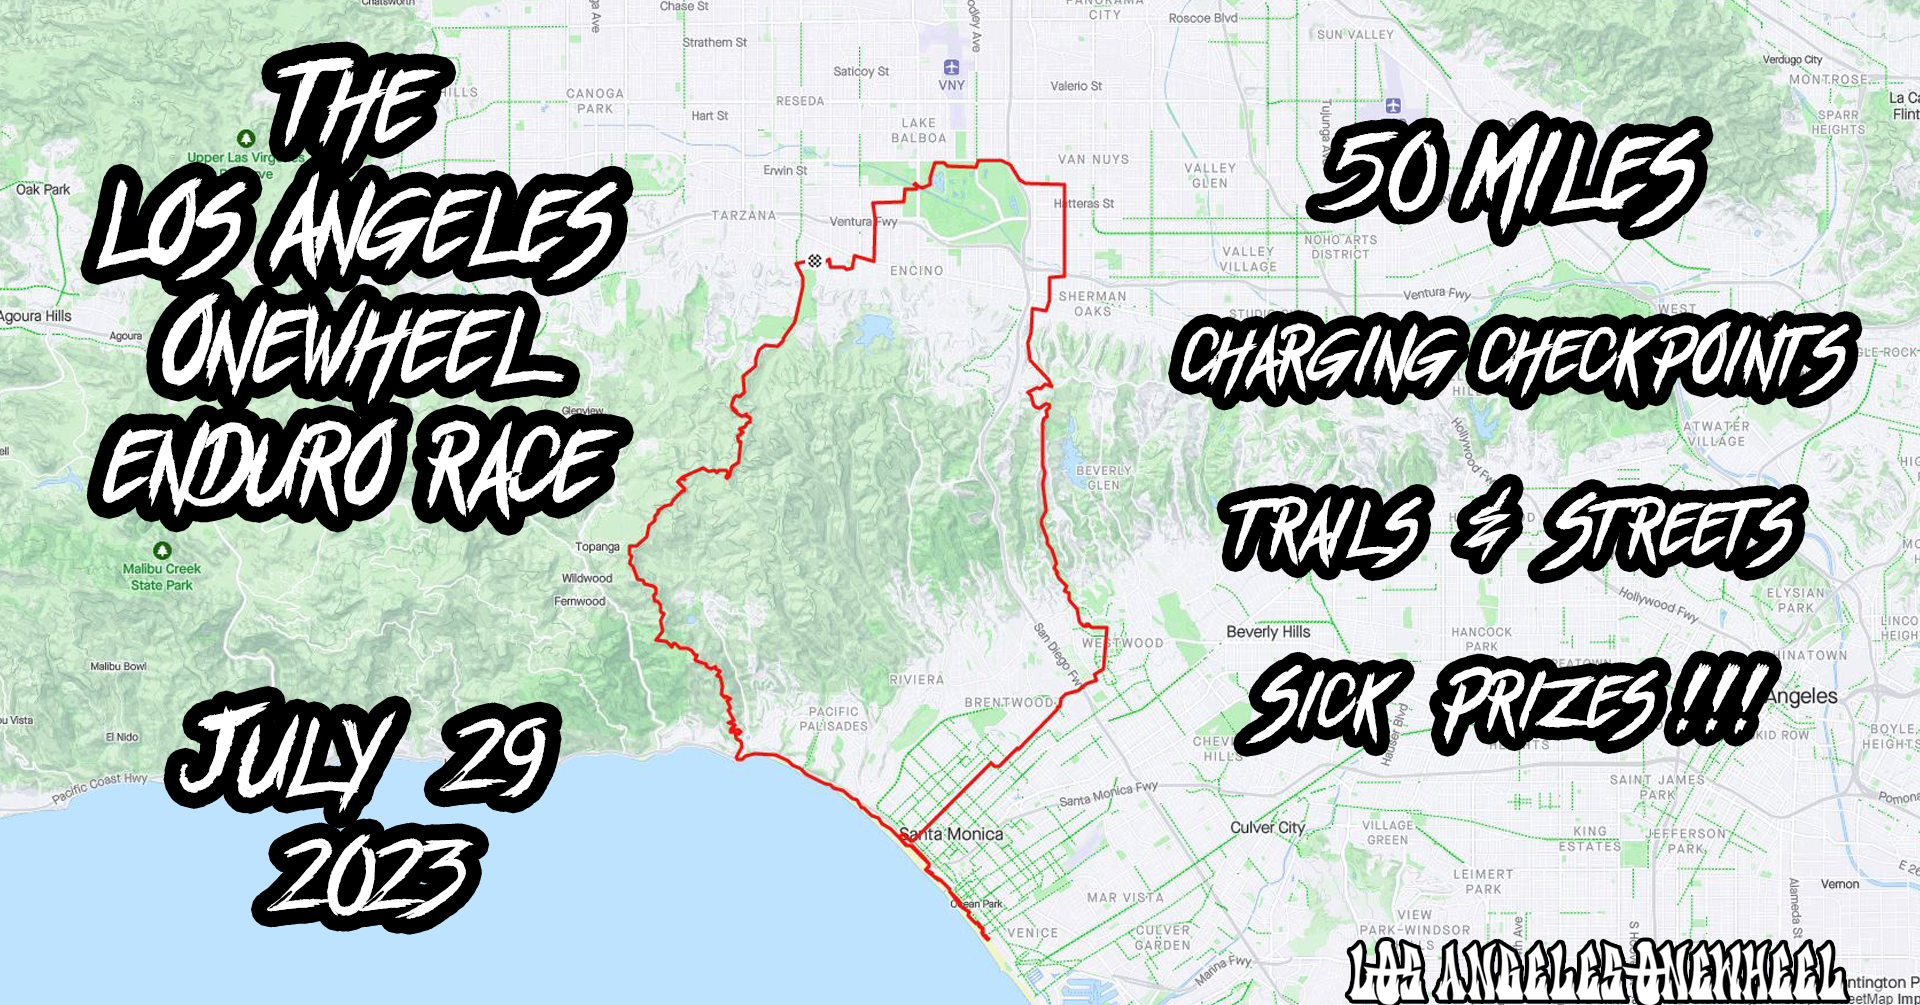 The Los Angeles Onewheel Enduro Race